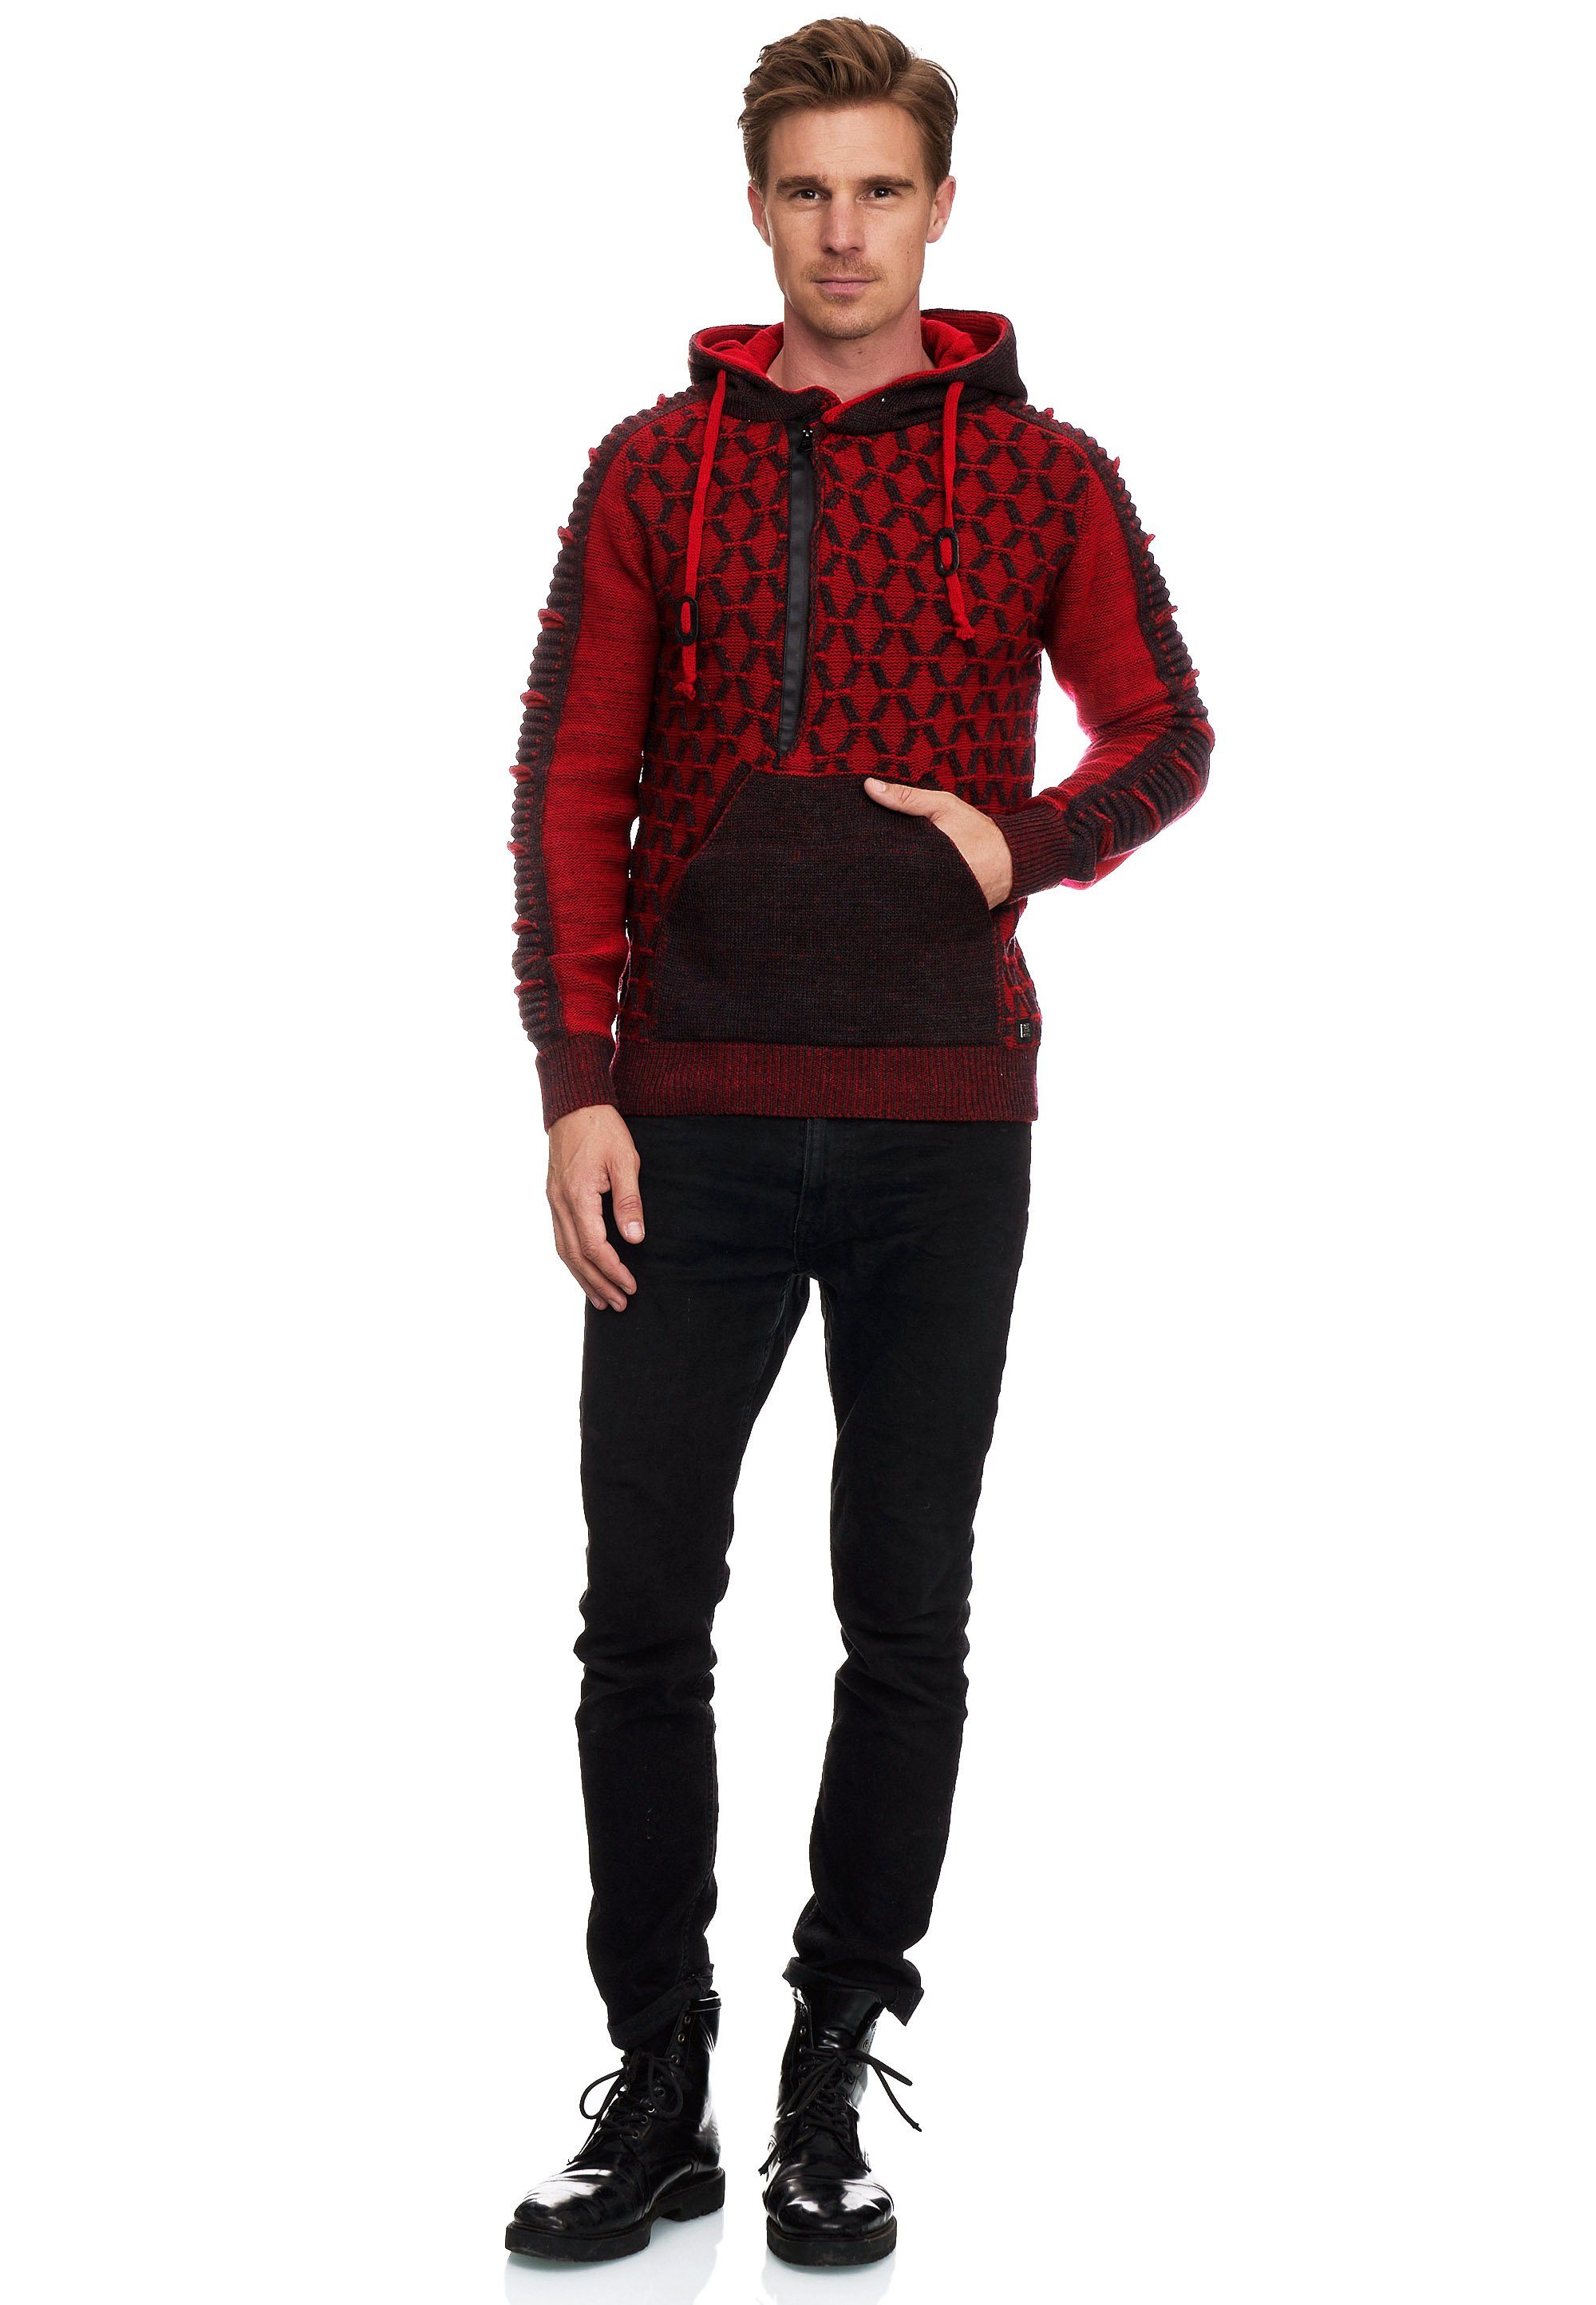 Rusty Neal Kapuzensweatshirt in ausgefallenem Design rot-anthrazit | Sweatshirts